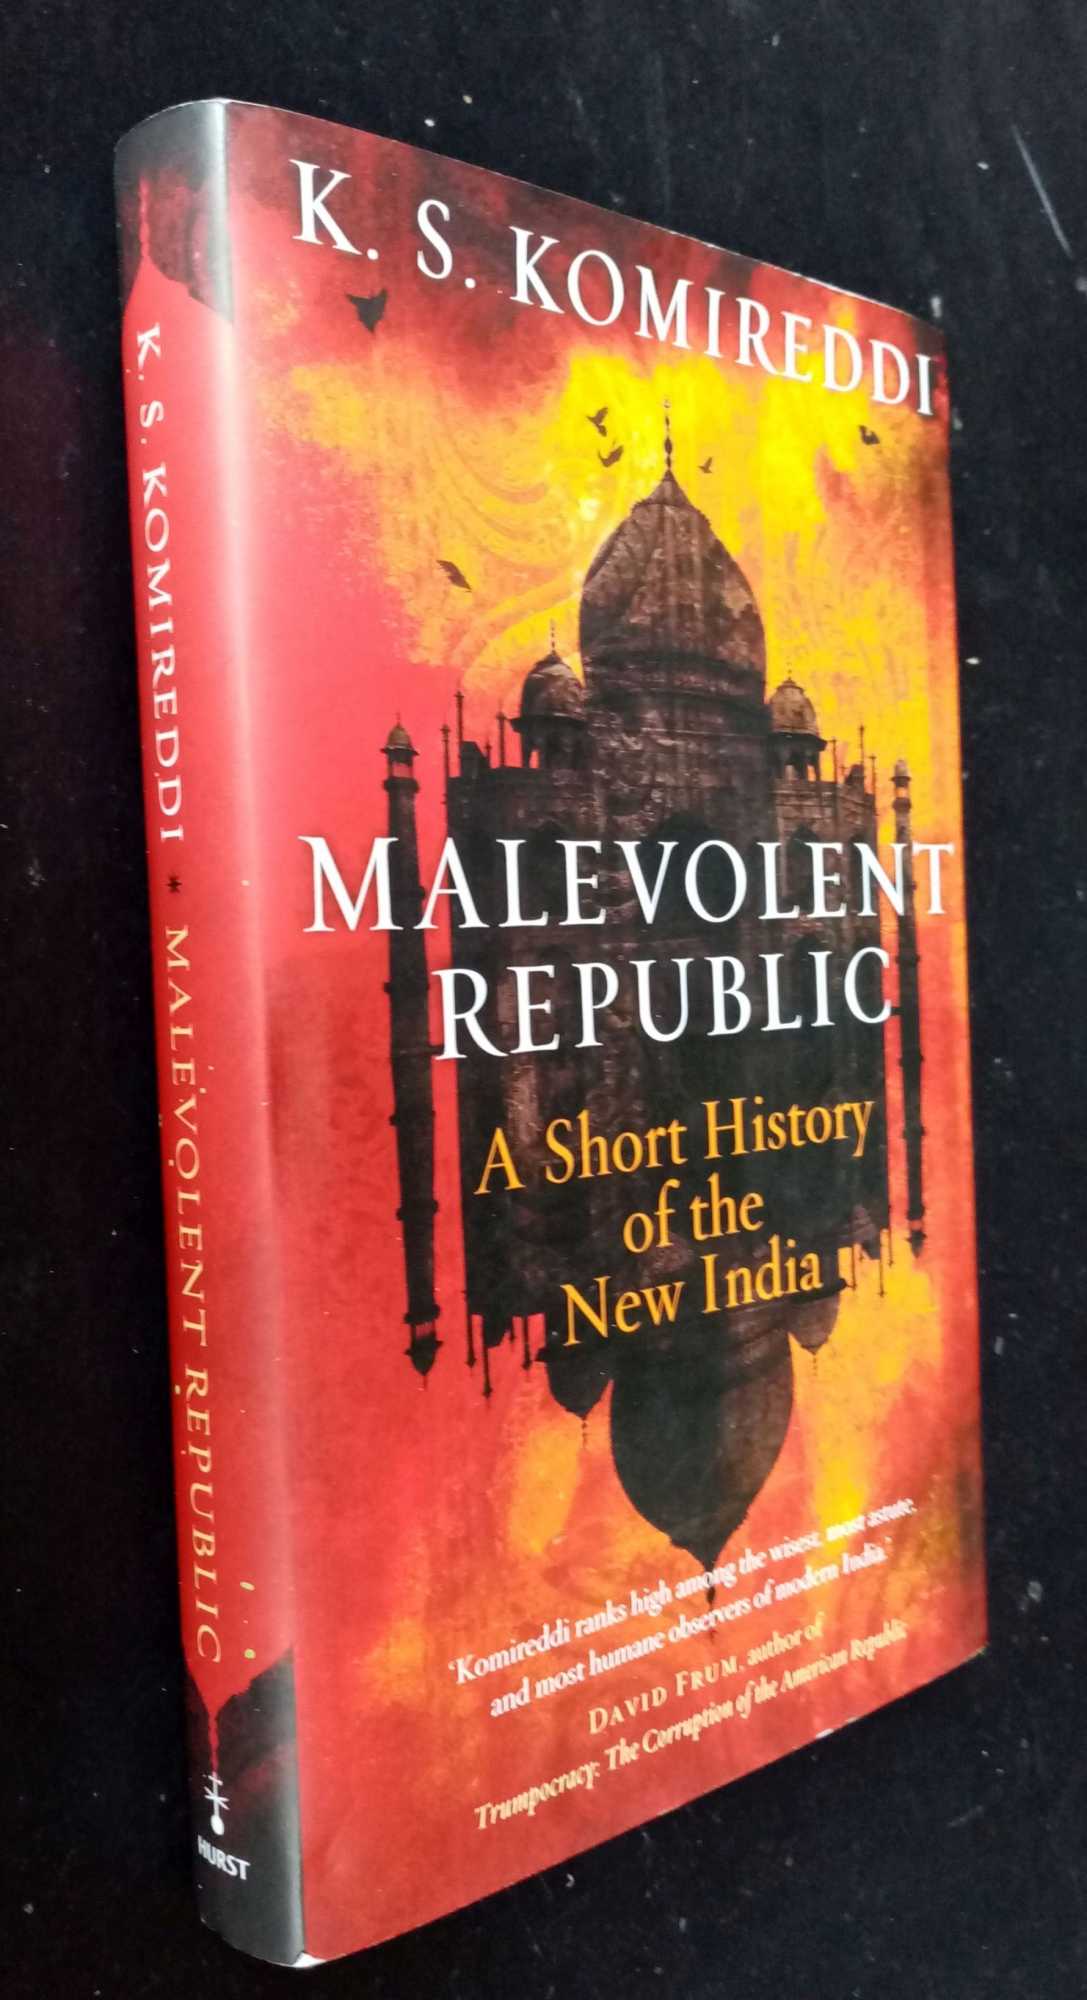 KS Komireddi - Malevolent Republic: A Short History of the New India